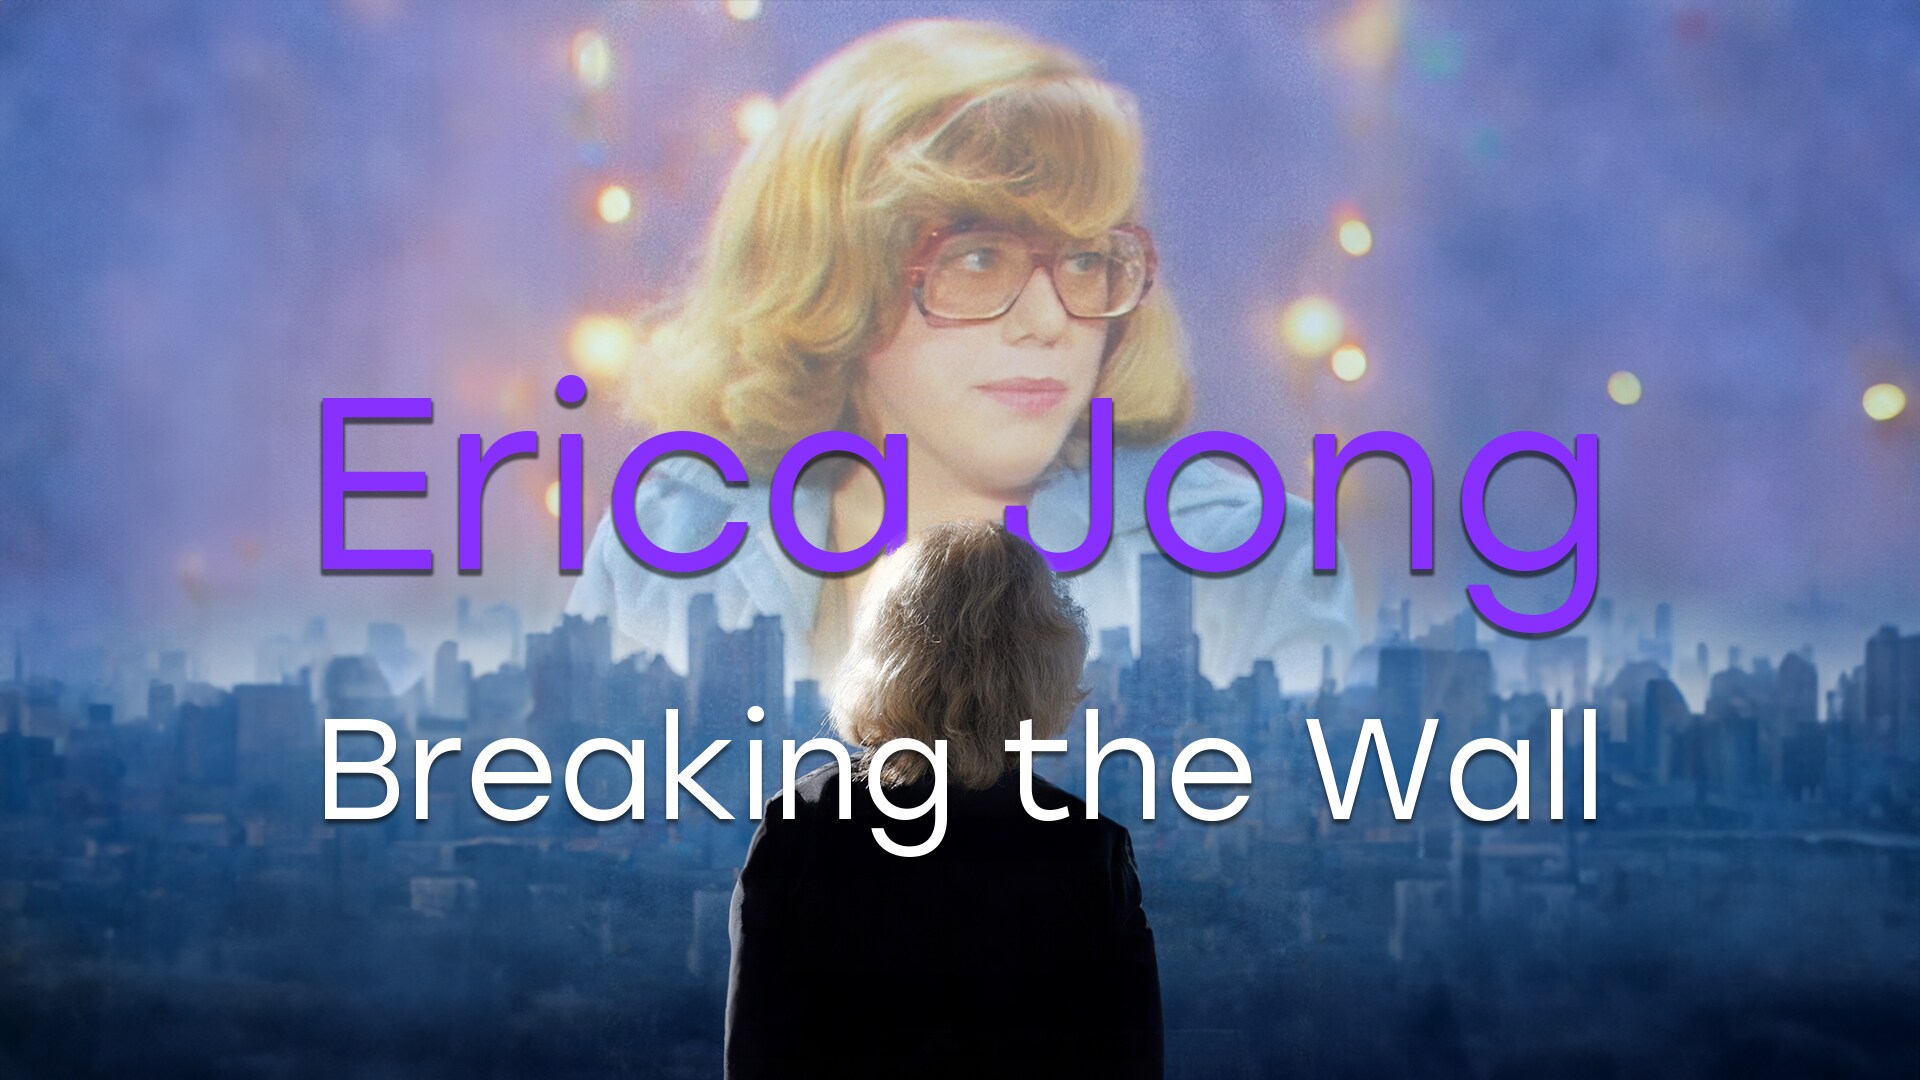 Erica Jong Breaking the wall